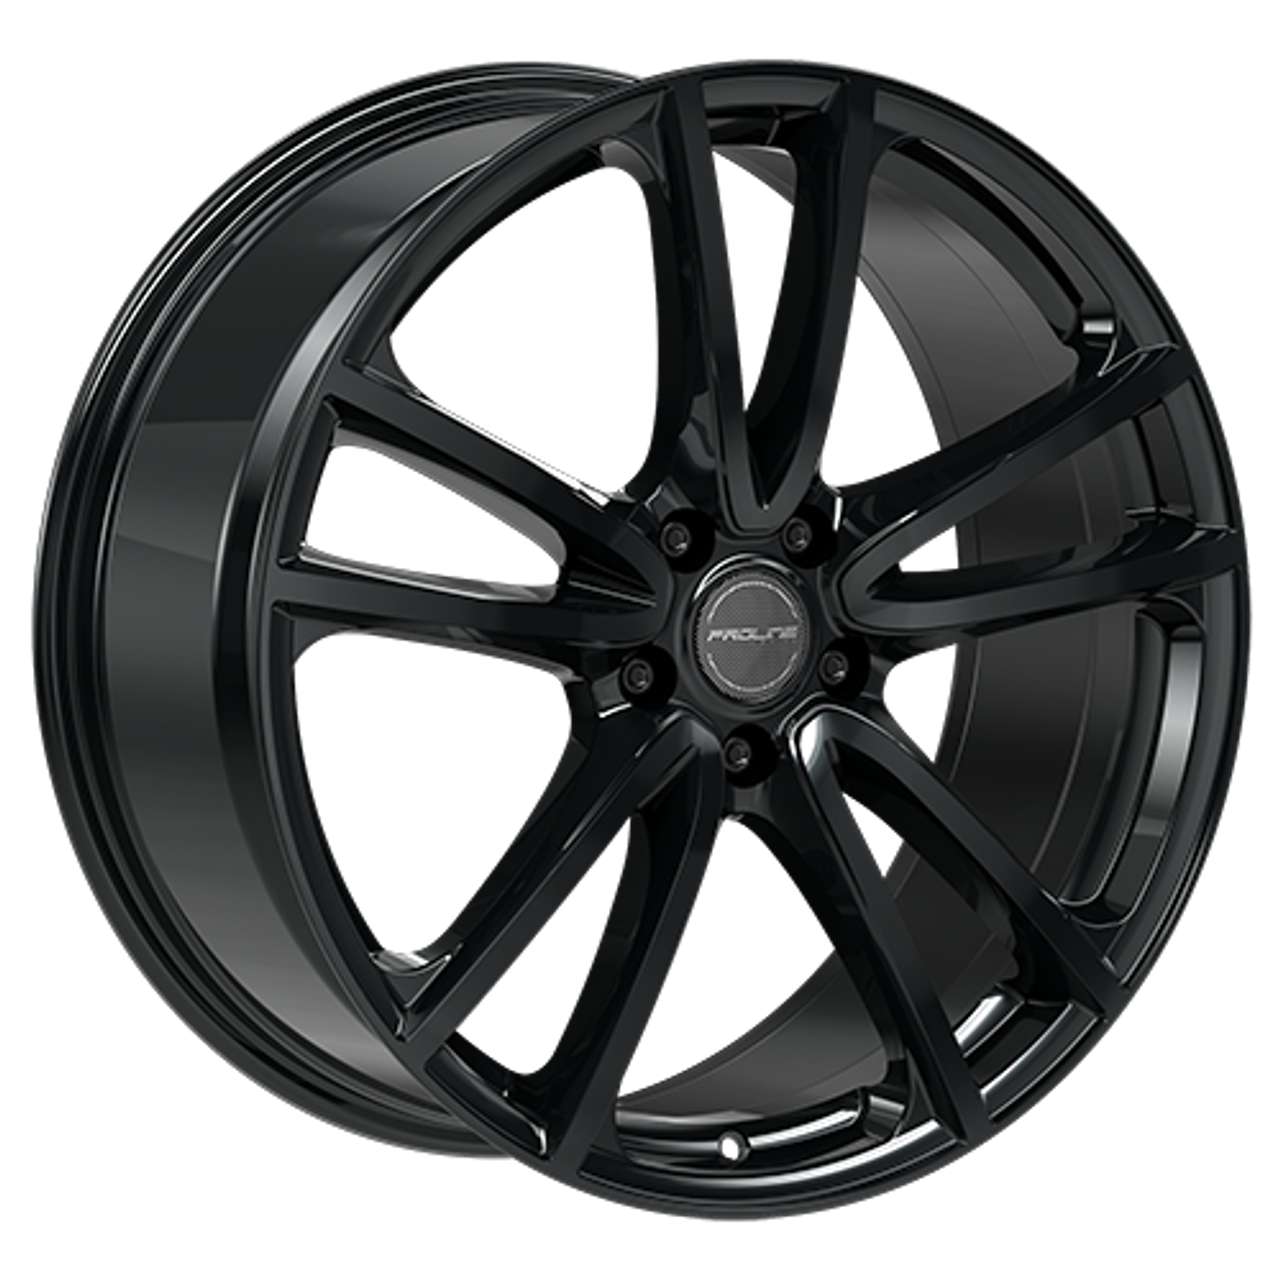 PROLINE CX300 black glossy 8.5Jx20 5x112 ET45